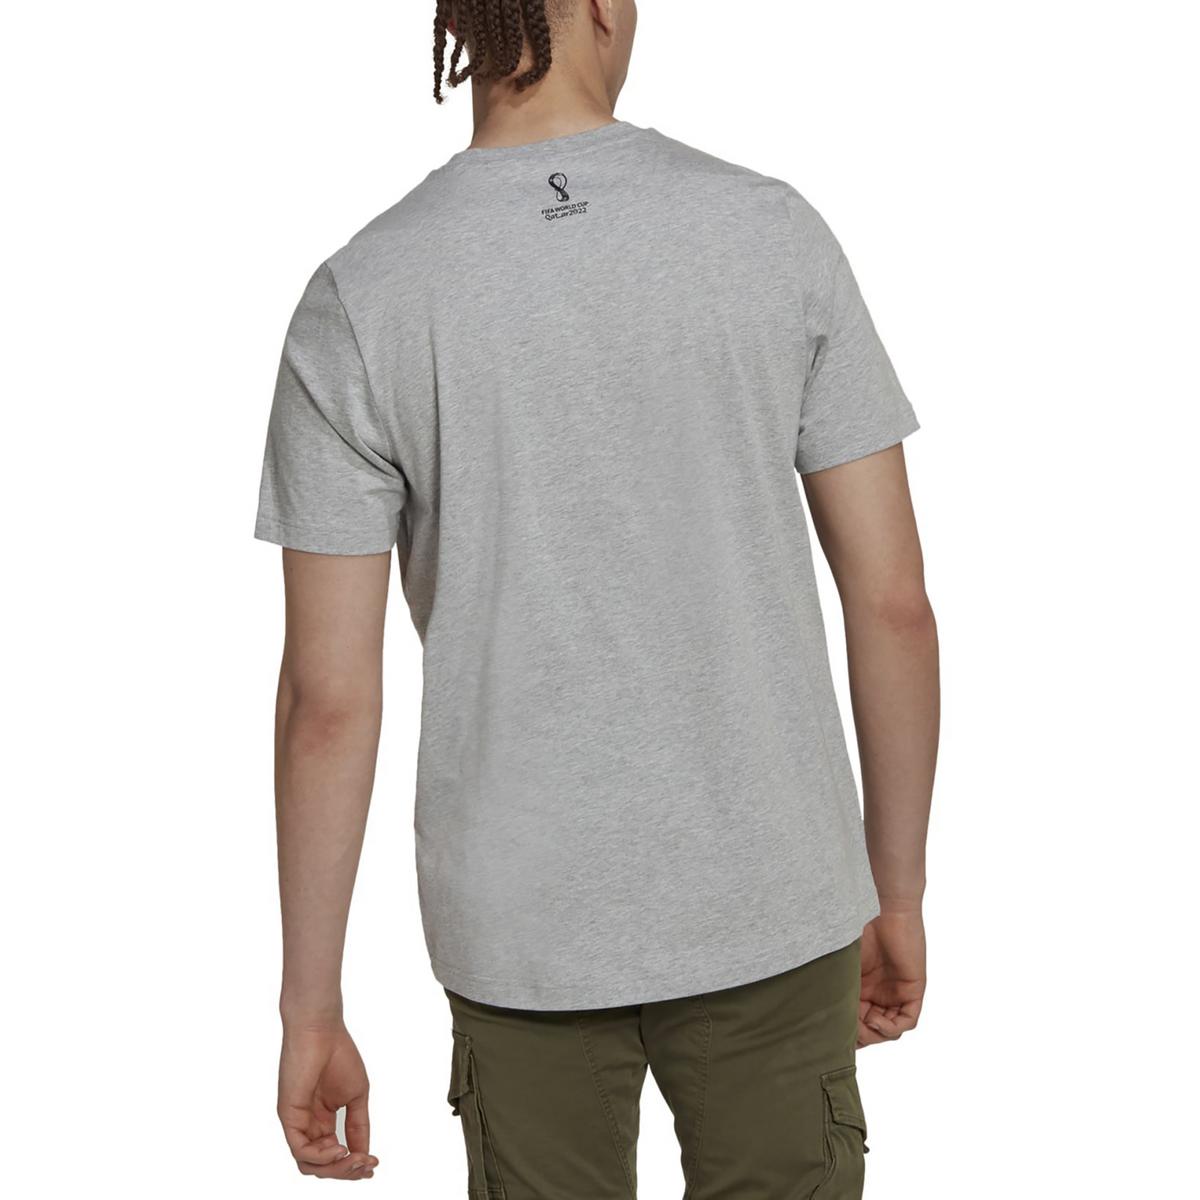 Adidas Mens Cotton Graphic Shirts & Tops